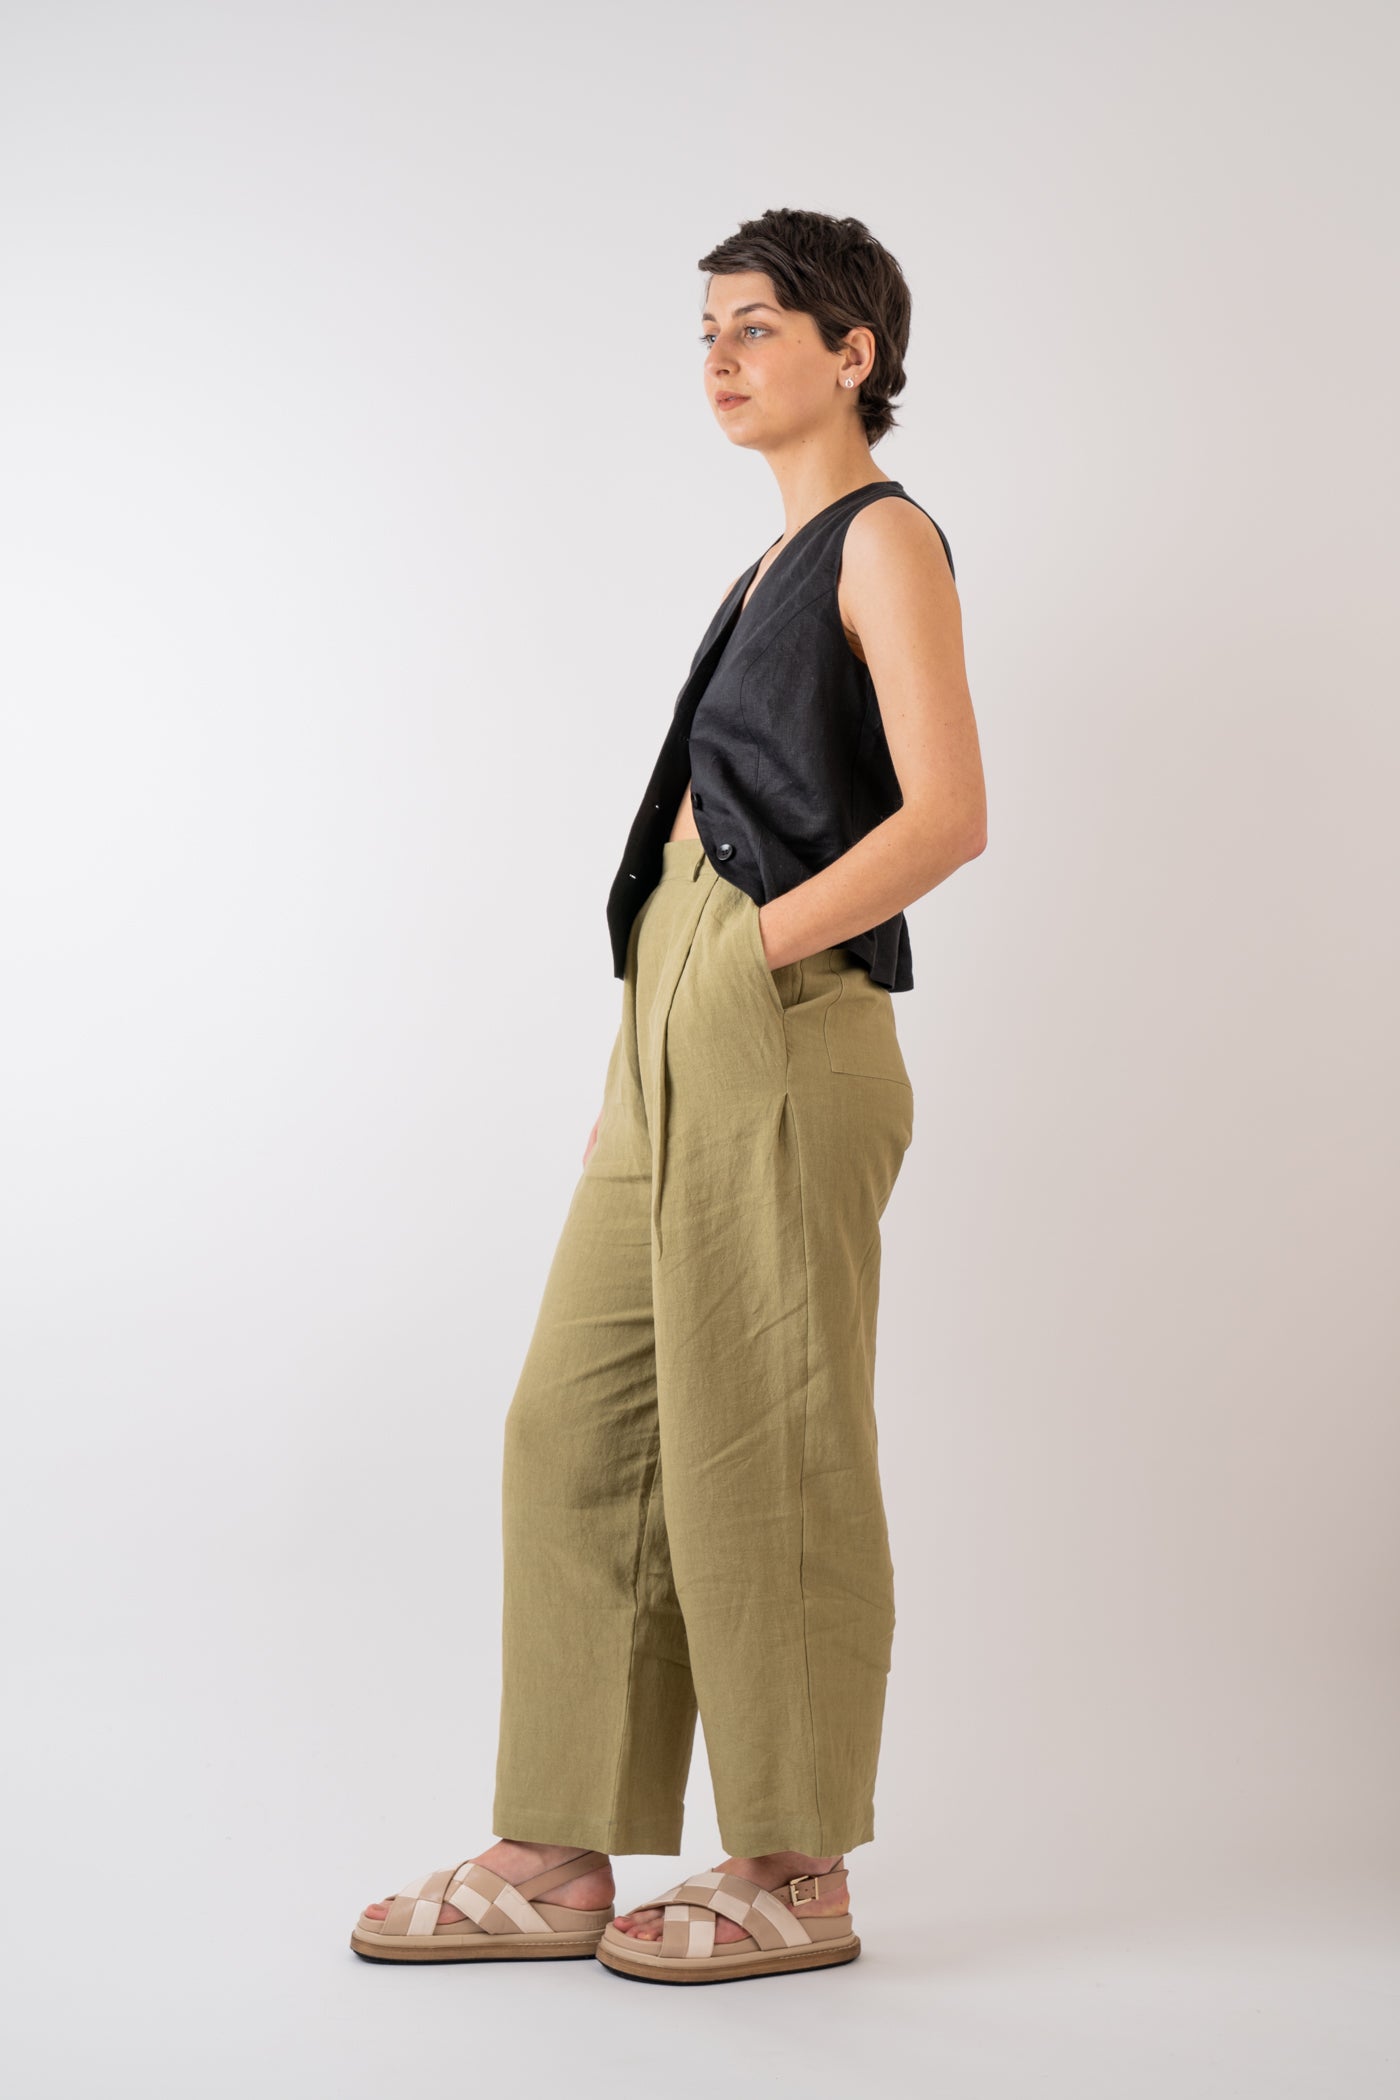 Buy Khaki Trousers  Pants for Men by STUDIO NEXX Online  Ajiocom